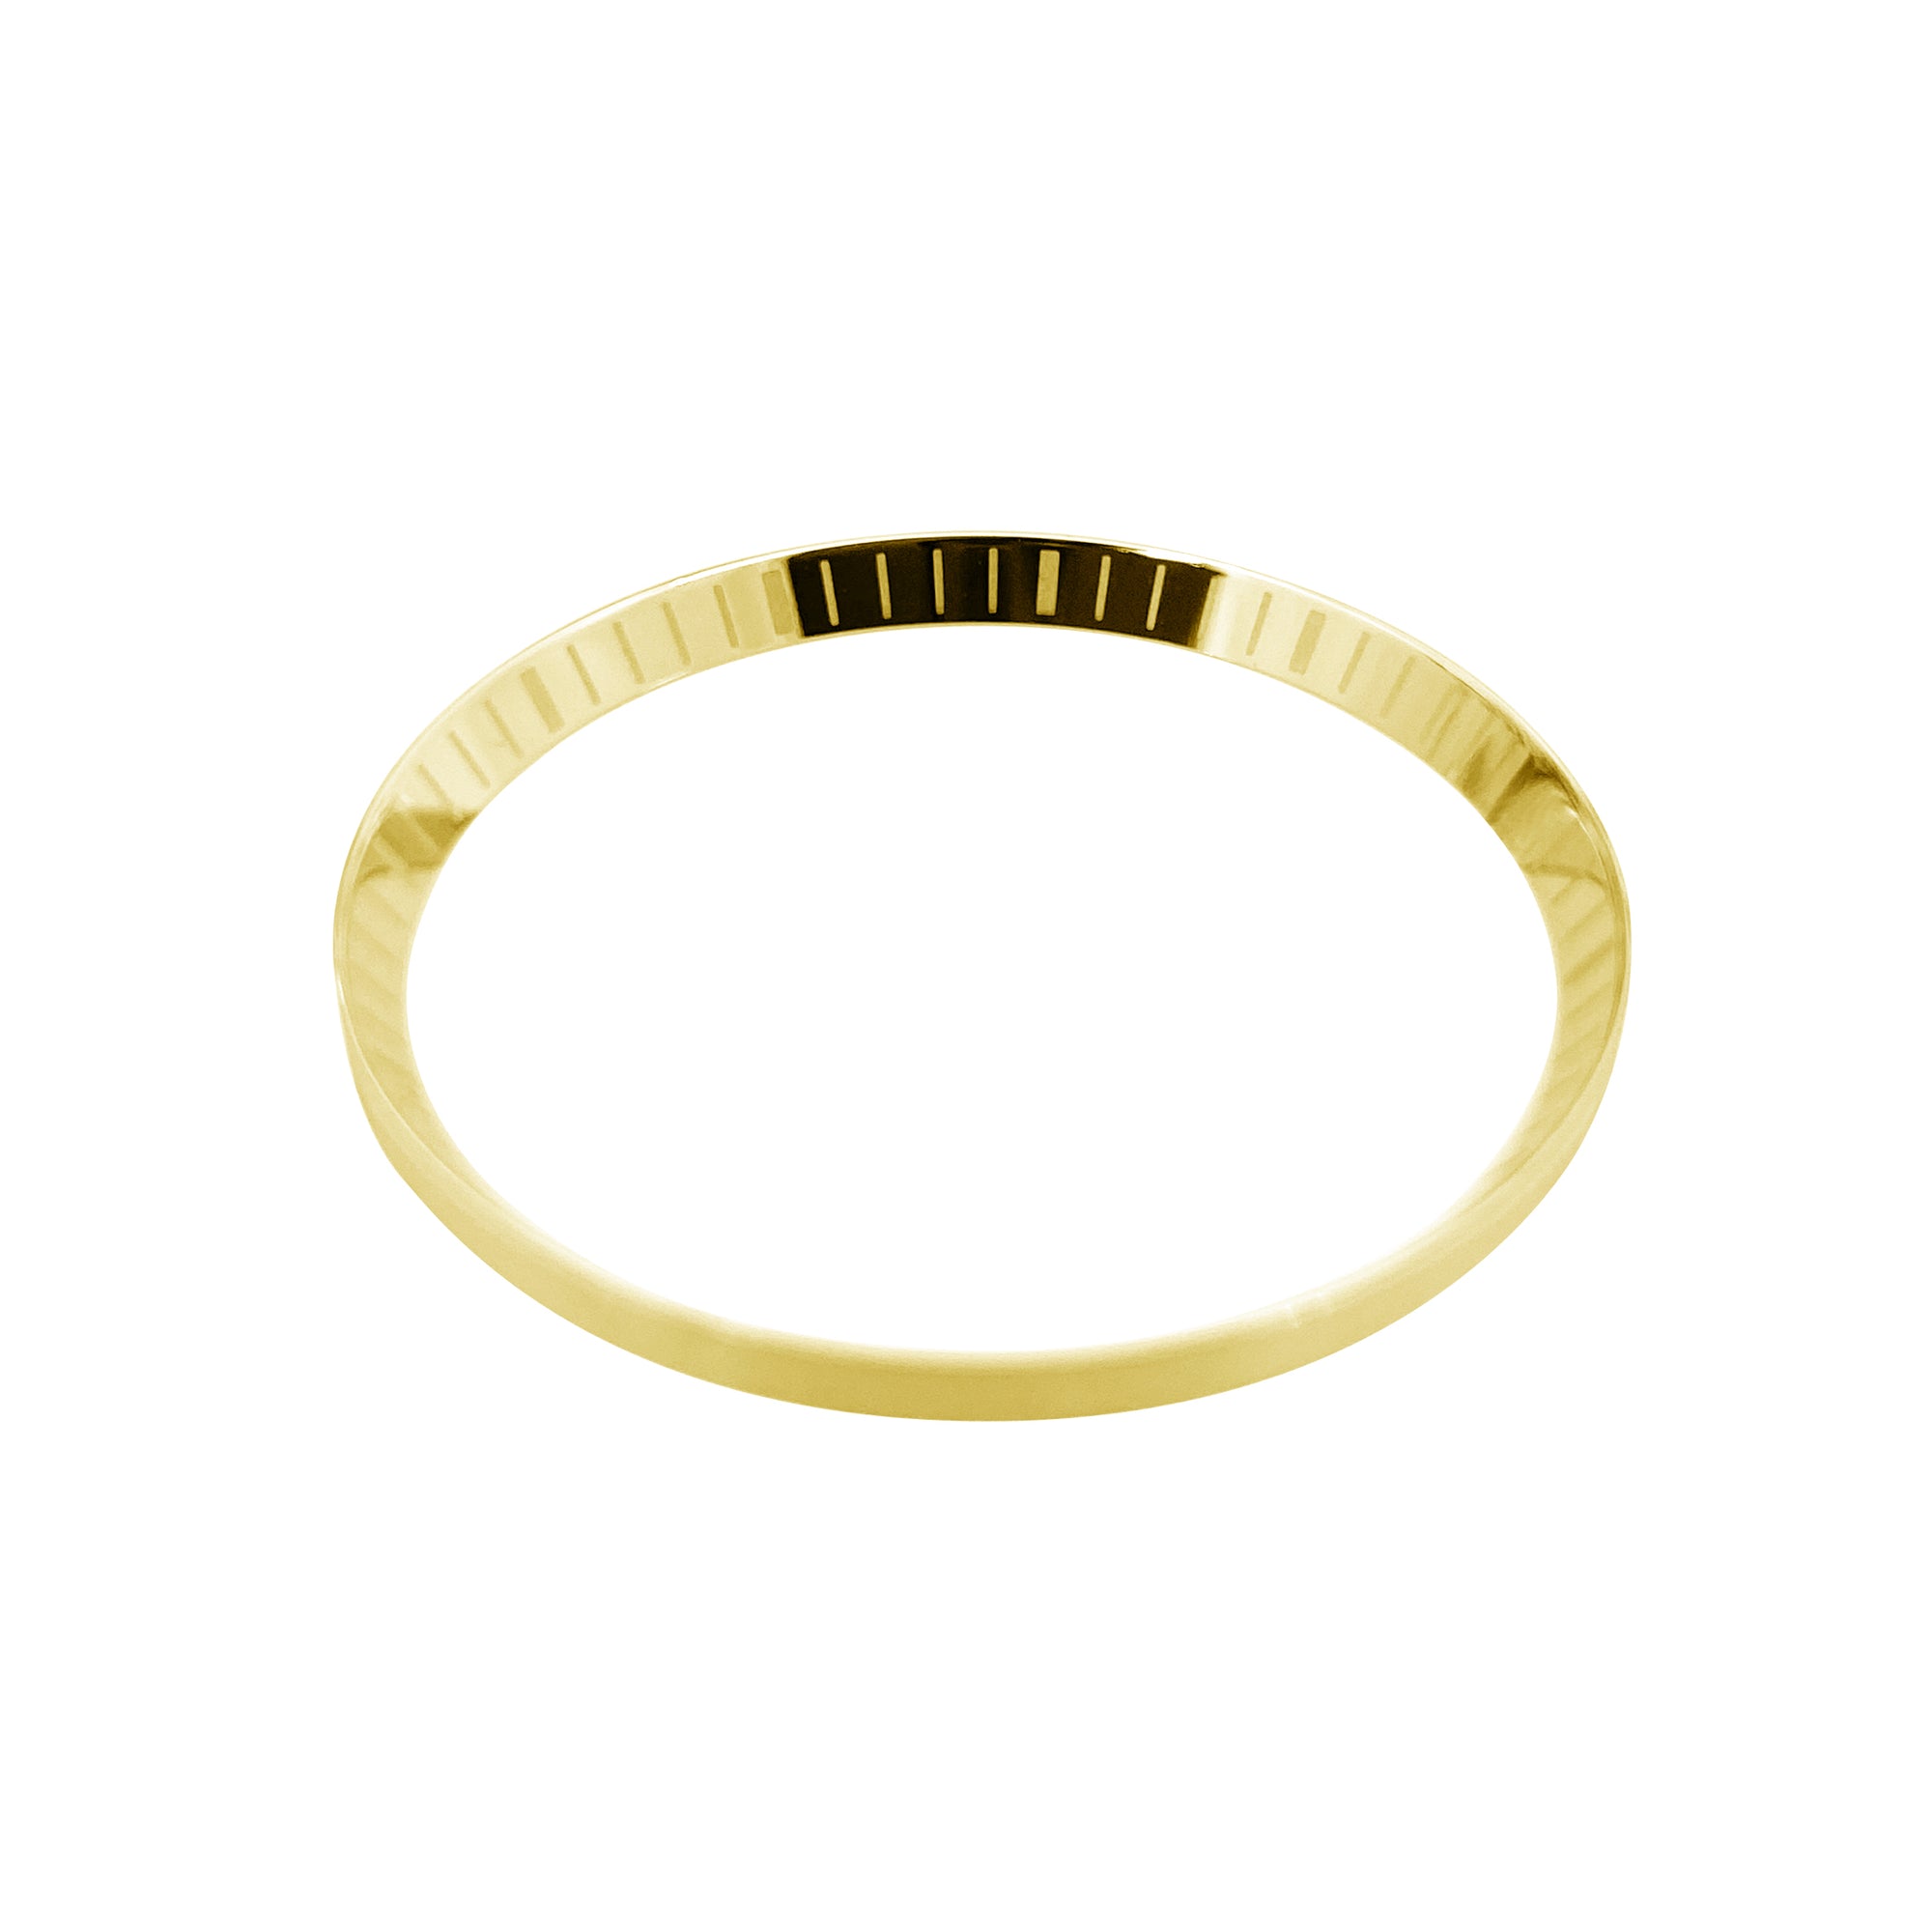 Chapter Ring - SKX007/SRPD - Polished Gold w Engraved Markers